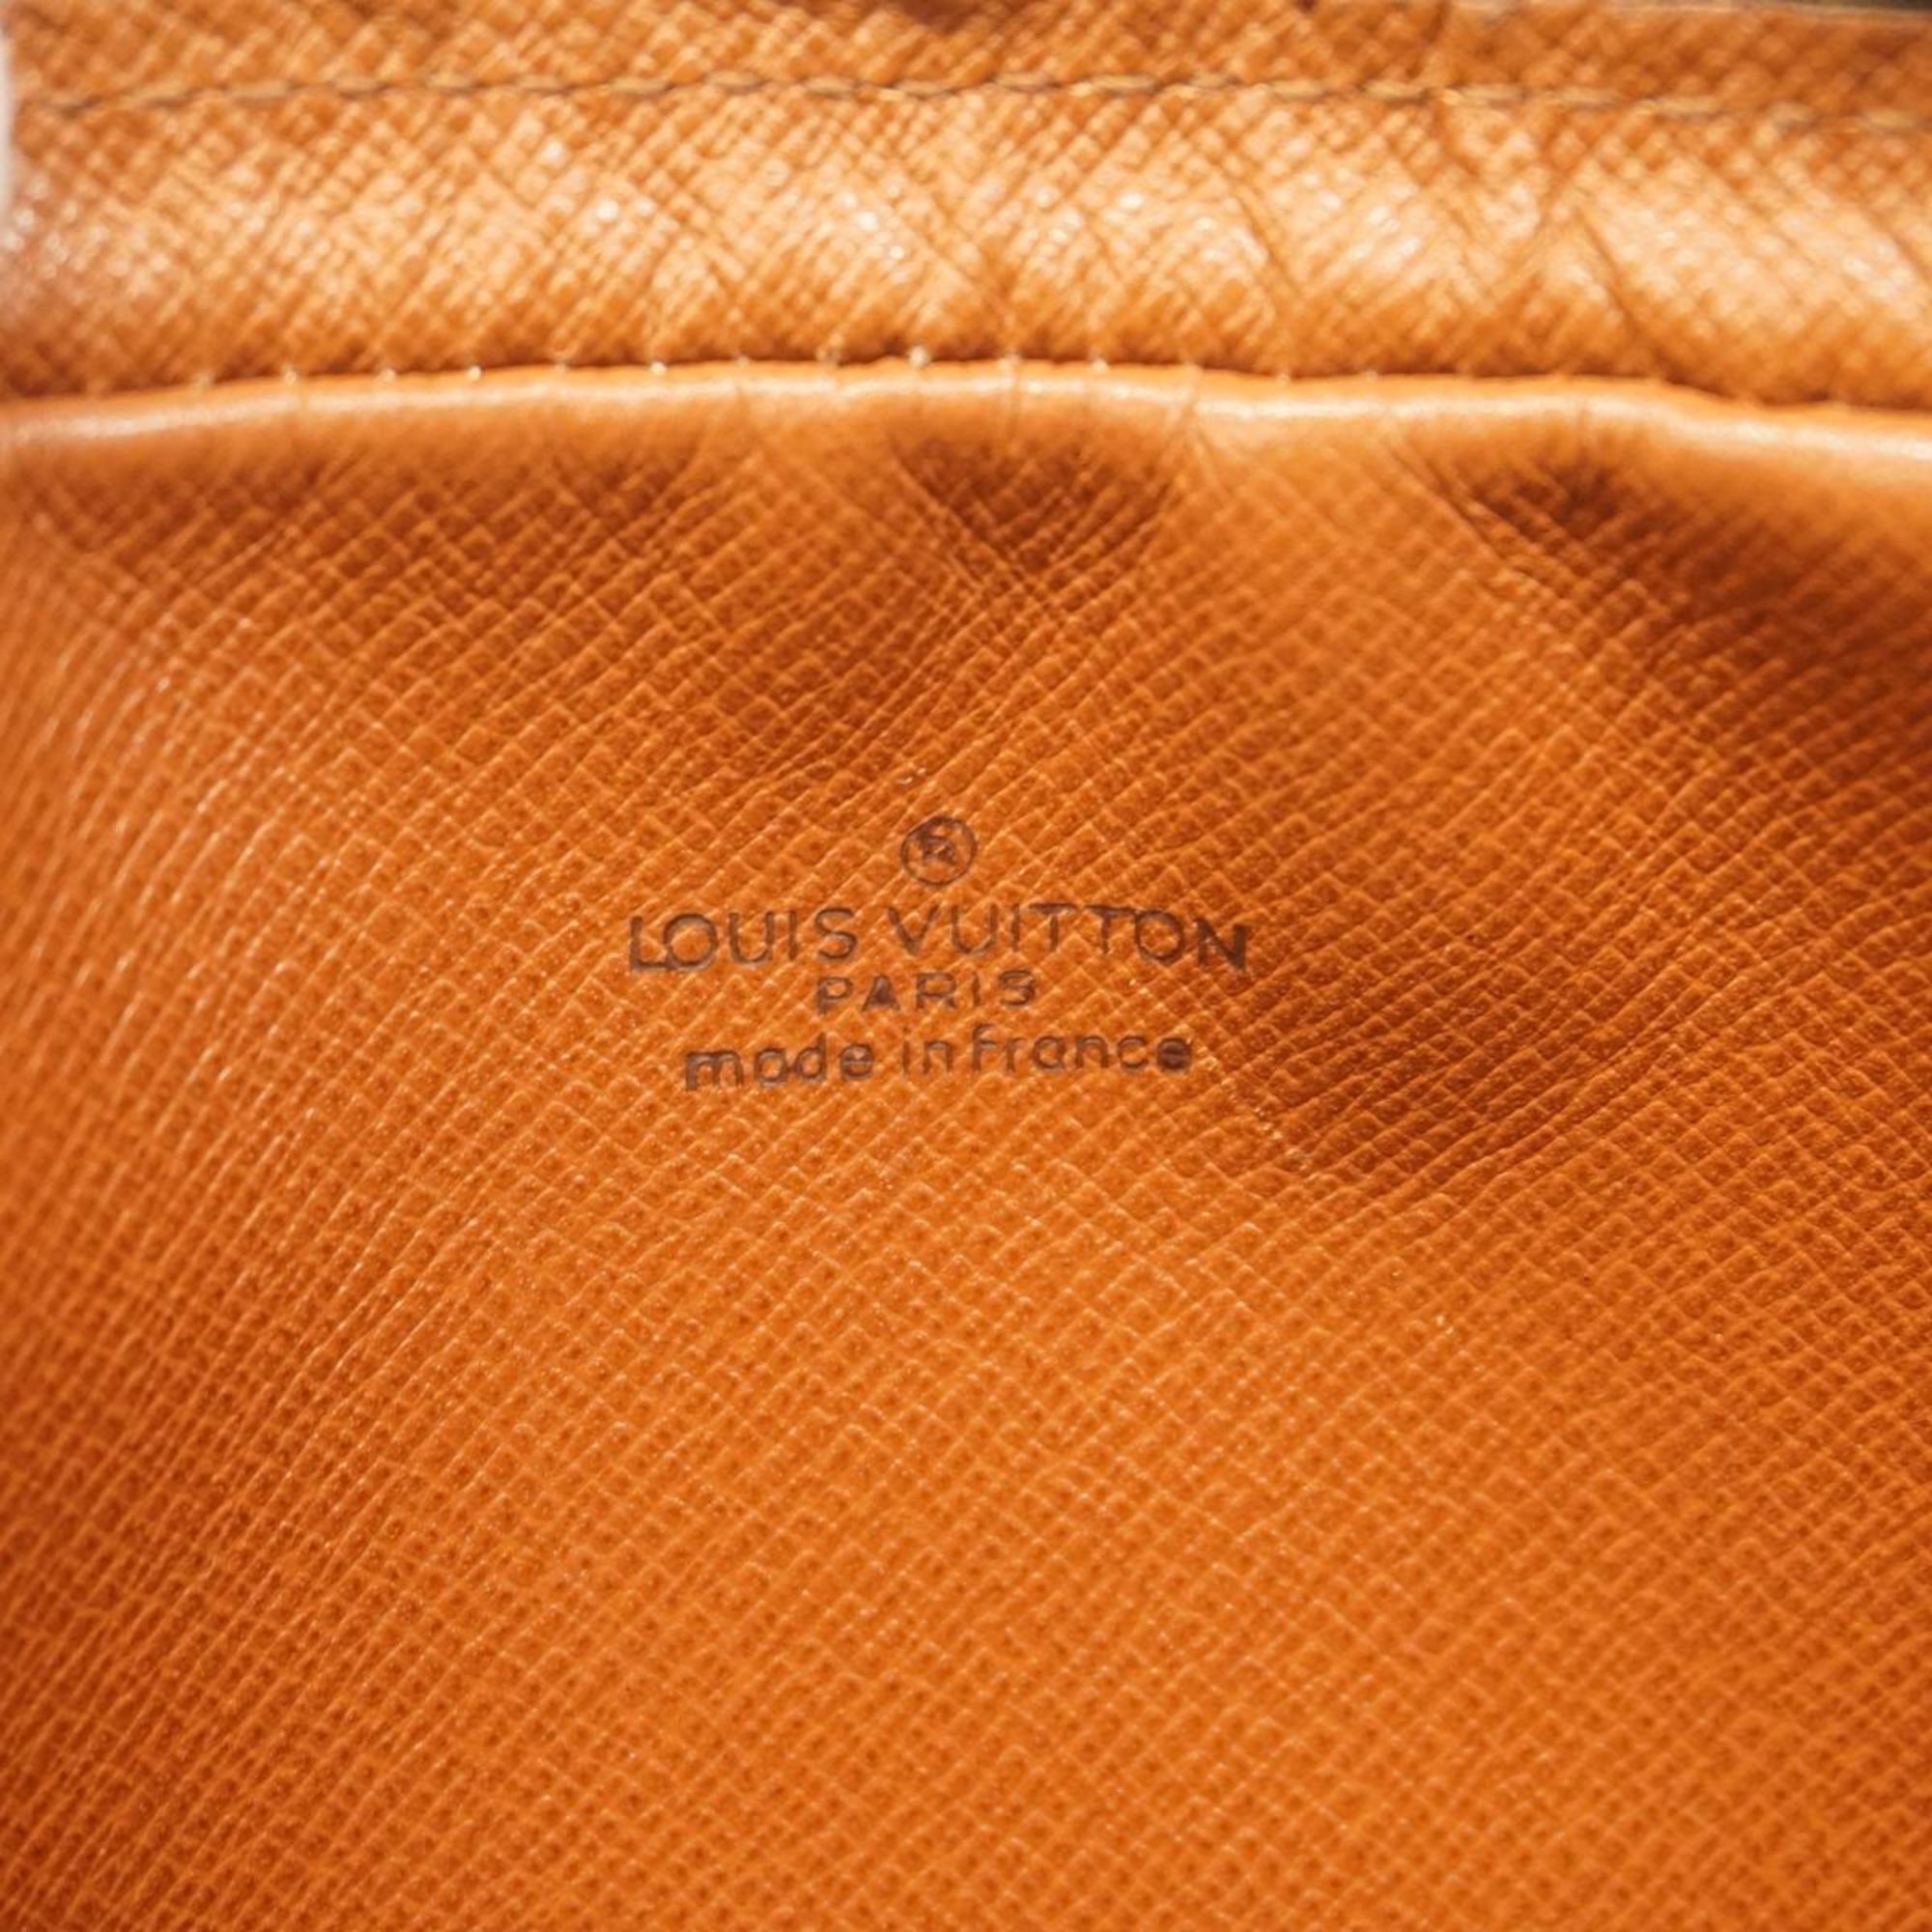 Louis Vuitton Clutch Bag Monogram Marly Dragonne PM M51827 Brown Men's